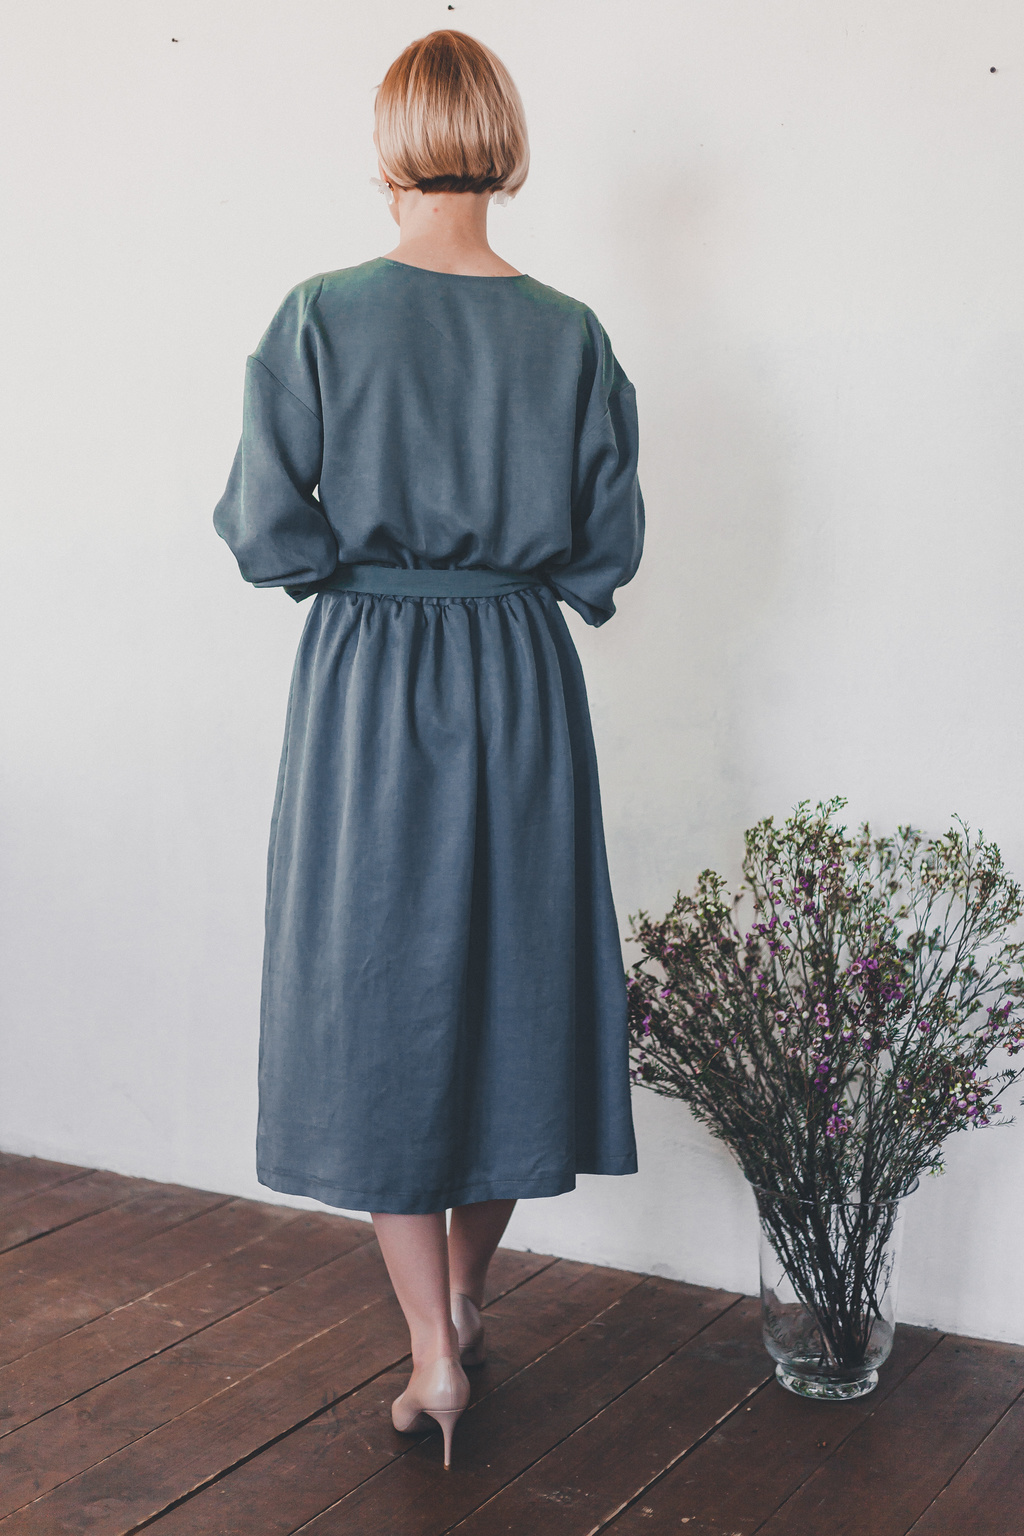 Платье «Нонна» цвета зелёная мята, размер 44-46, вырез округлый